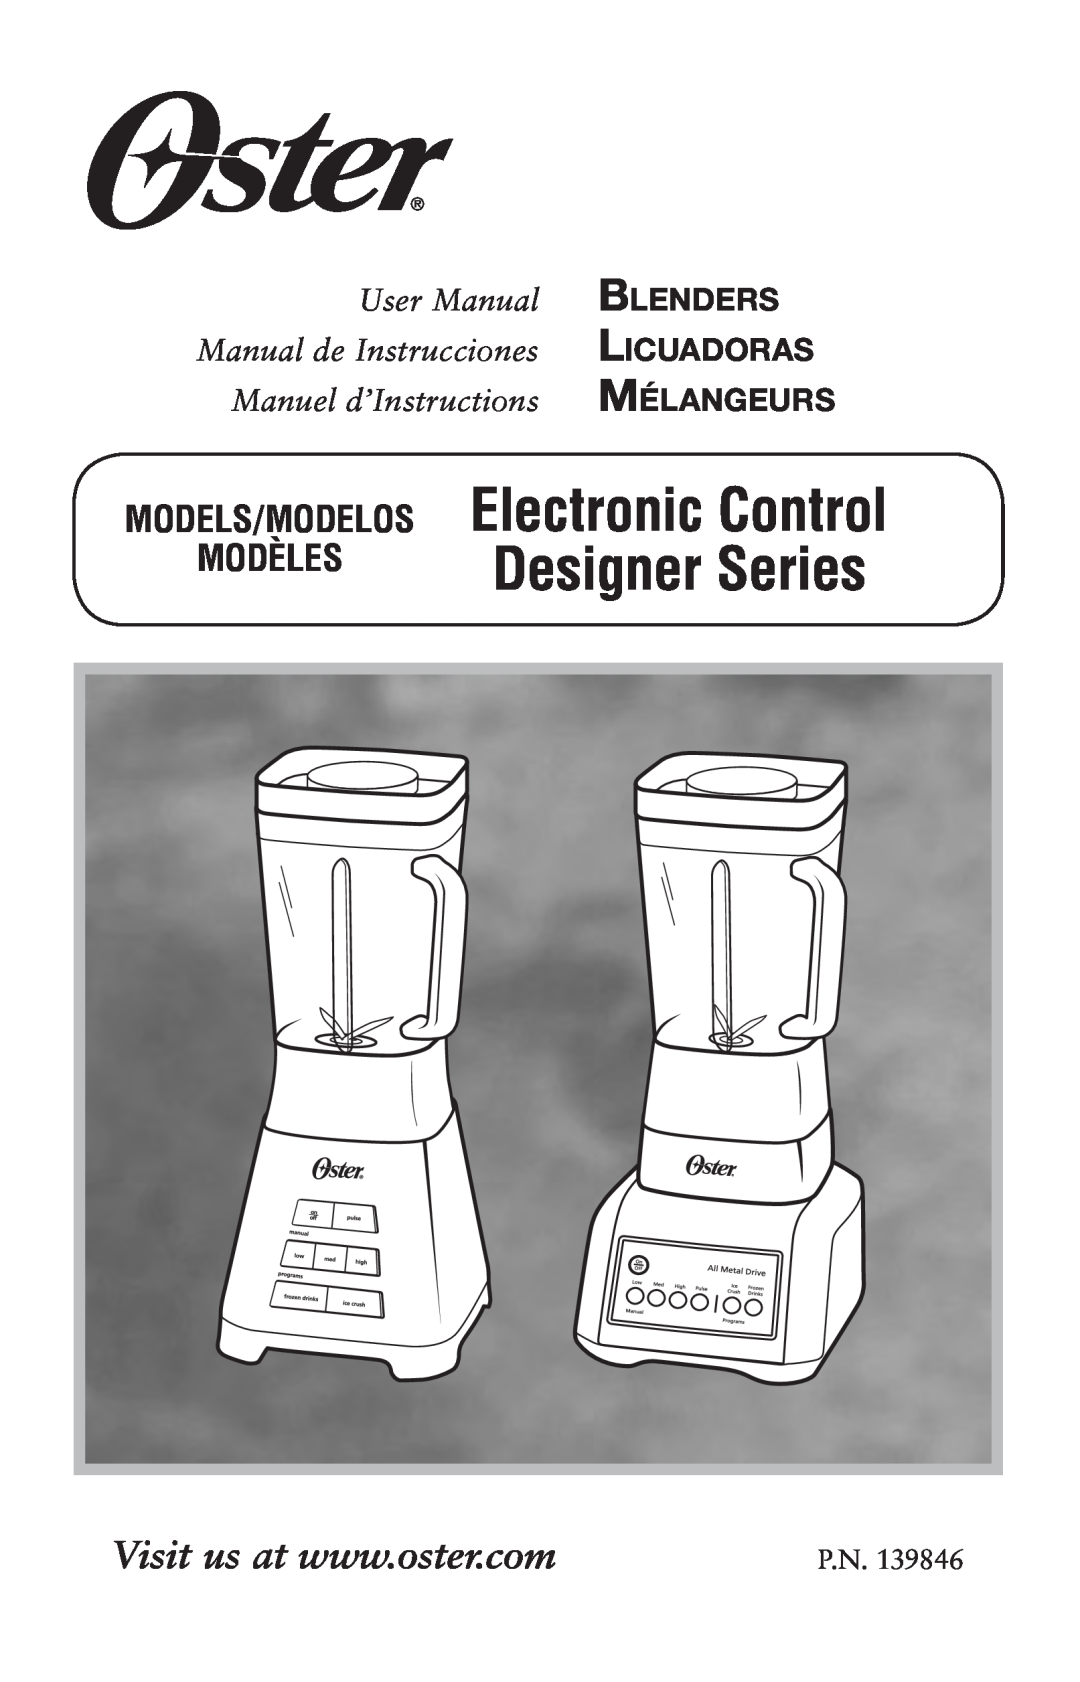 Oster 139846 user manual Models/Modelos Modèles, Electronic Control Designer Series, User Manual, Blenders, Licuadoras 